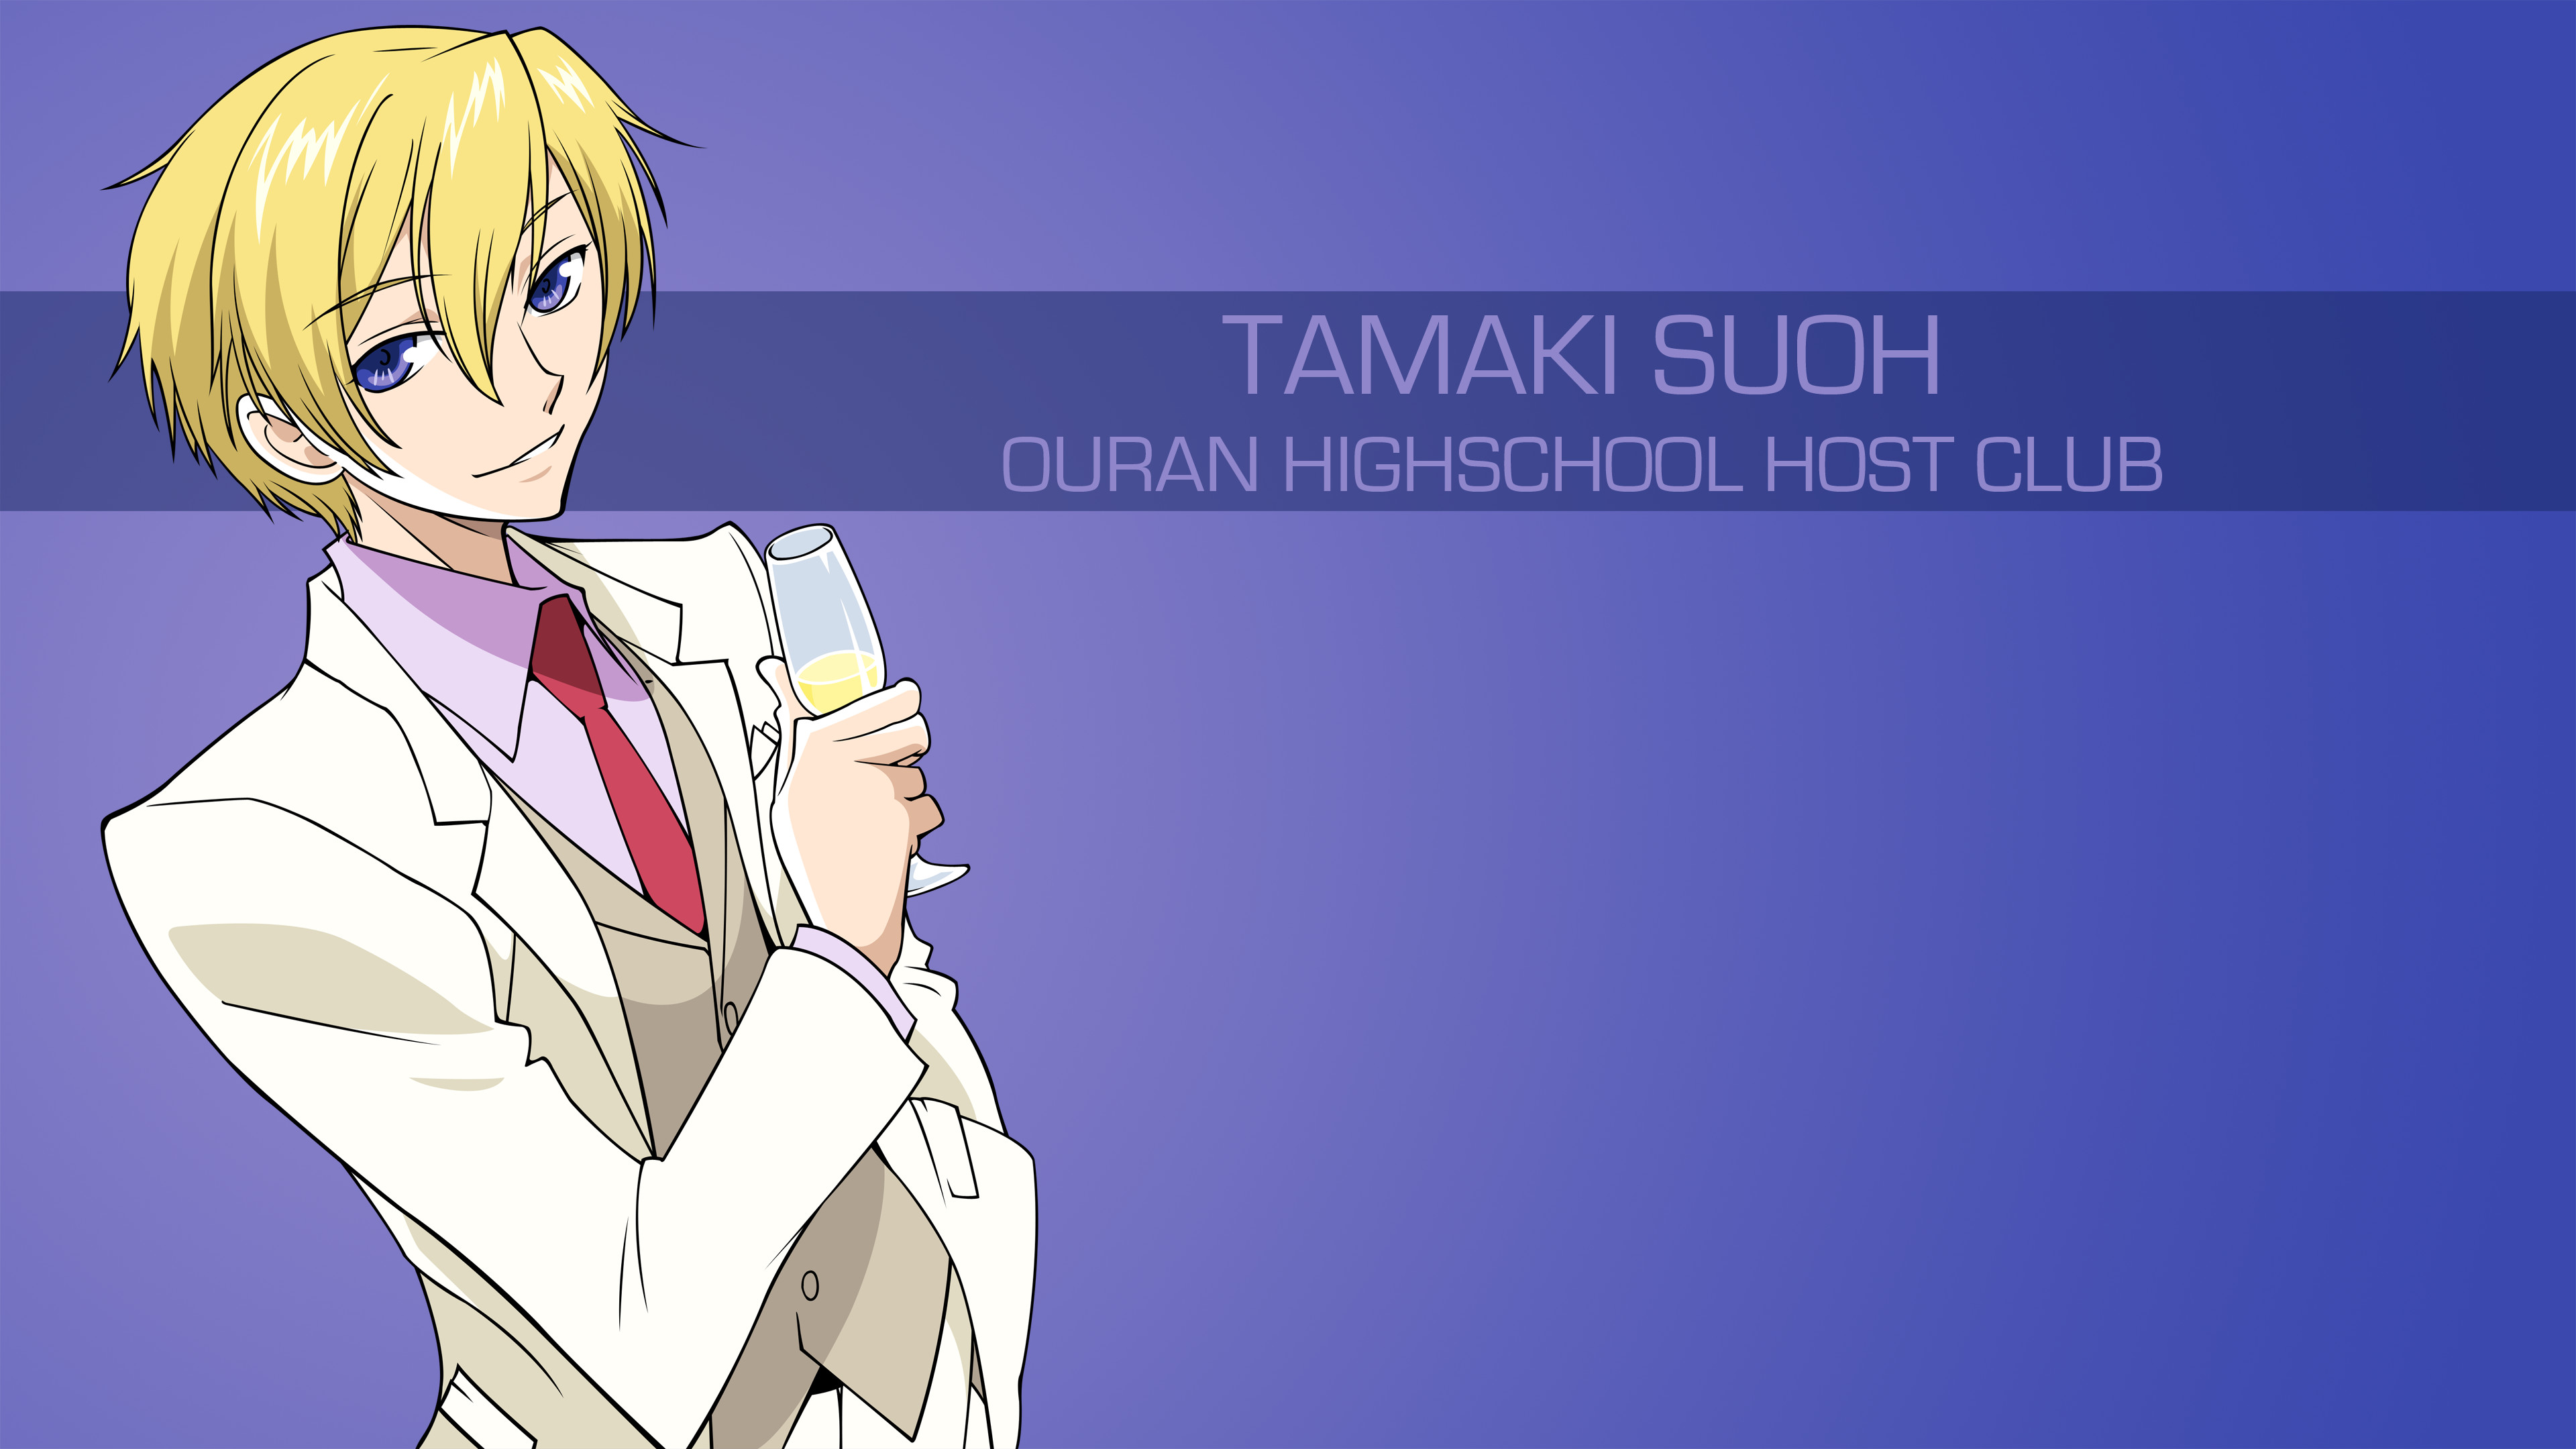 3840x2160 ... Ouran Highschool Host Club-Tamaki Suoh by spectralfire234